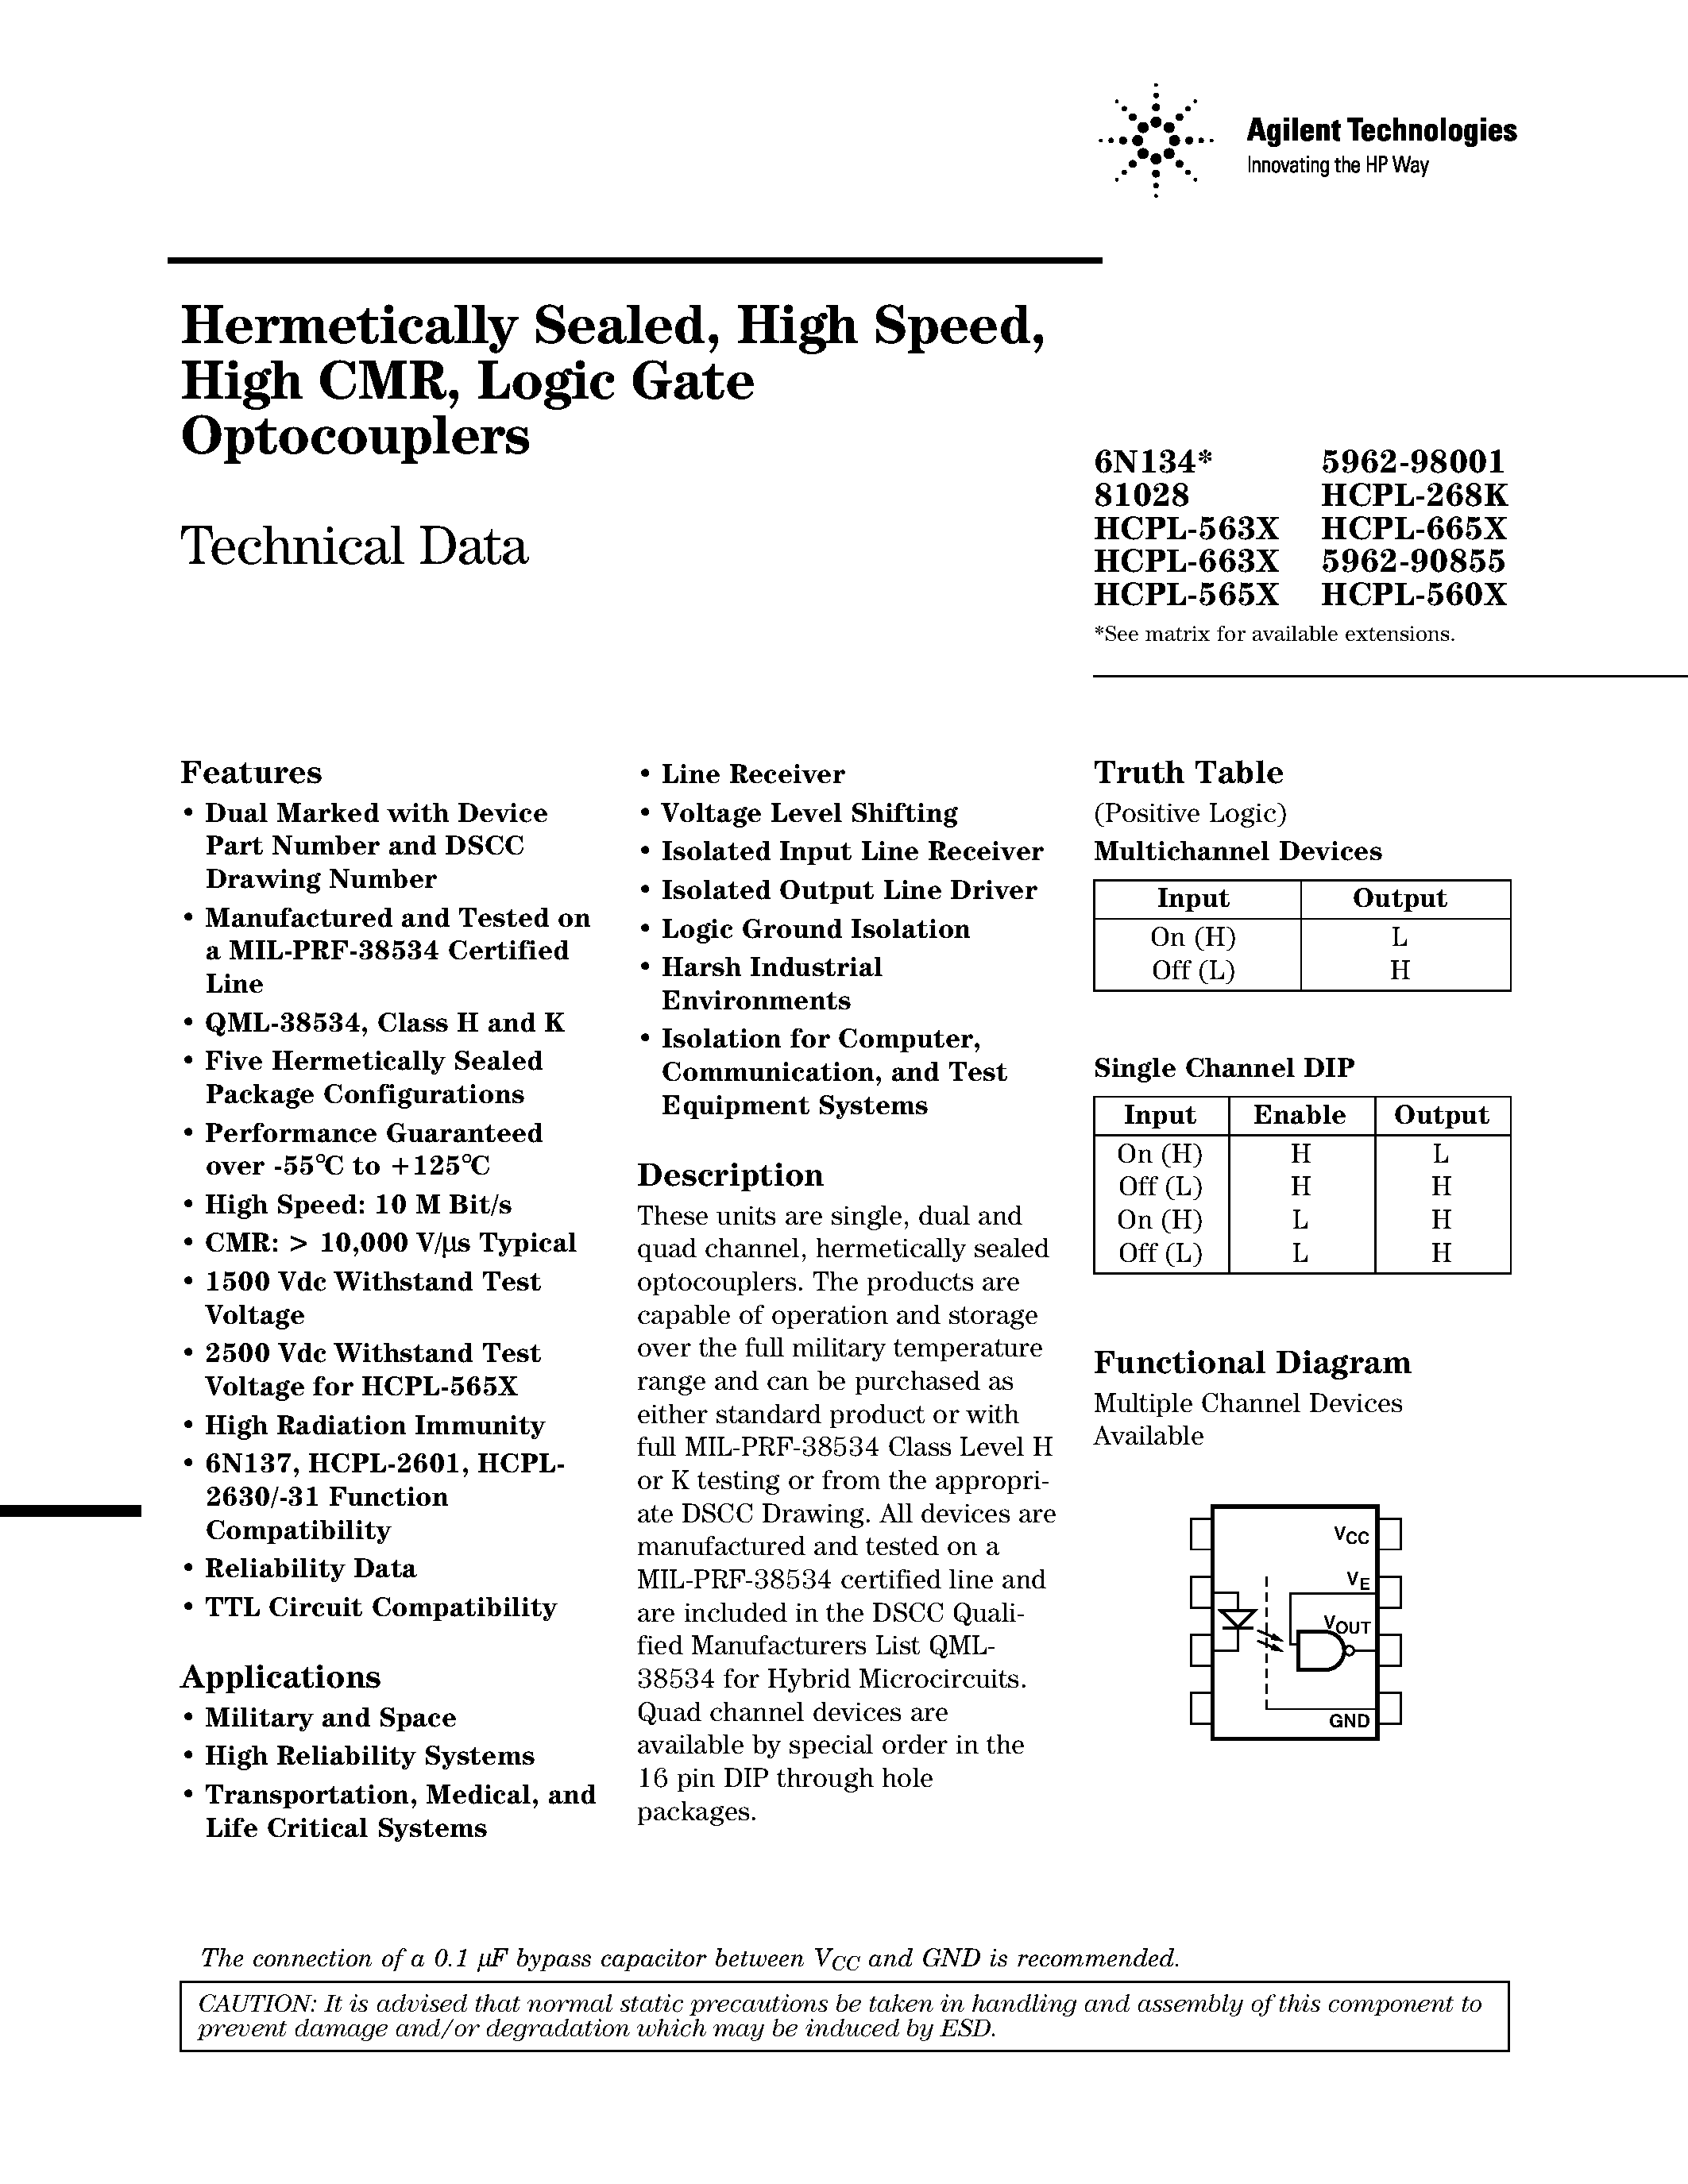 Datasheet HCPL-268K - (HCPL-xxxx) Hermetically Sealed / High Speed / High CMR / Logic Gate Optocouplers page 1